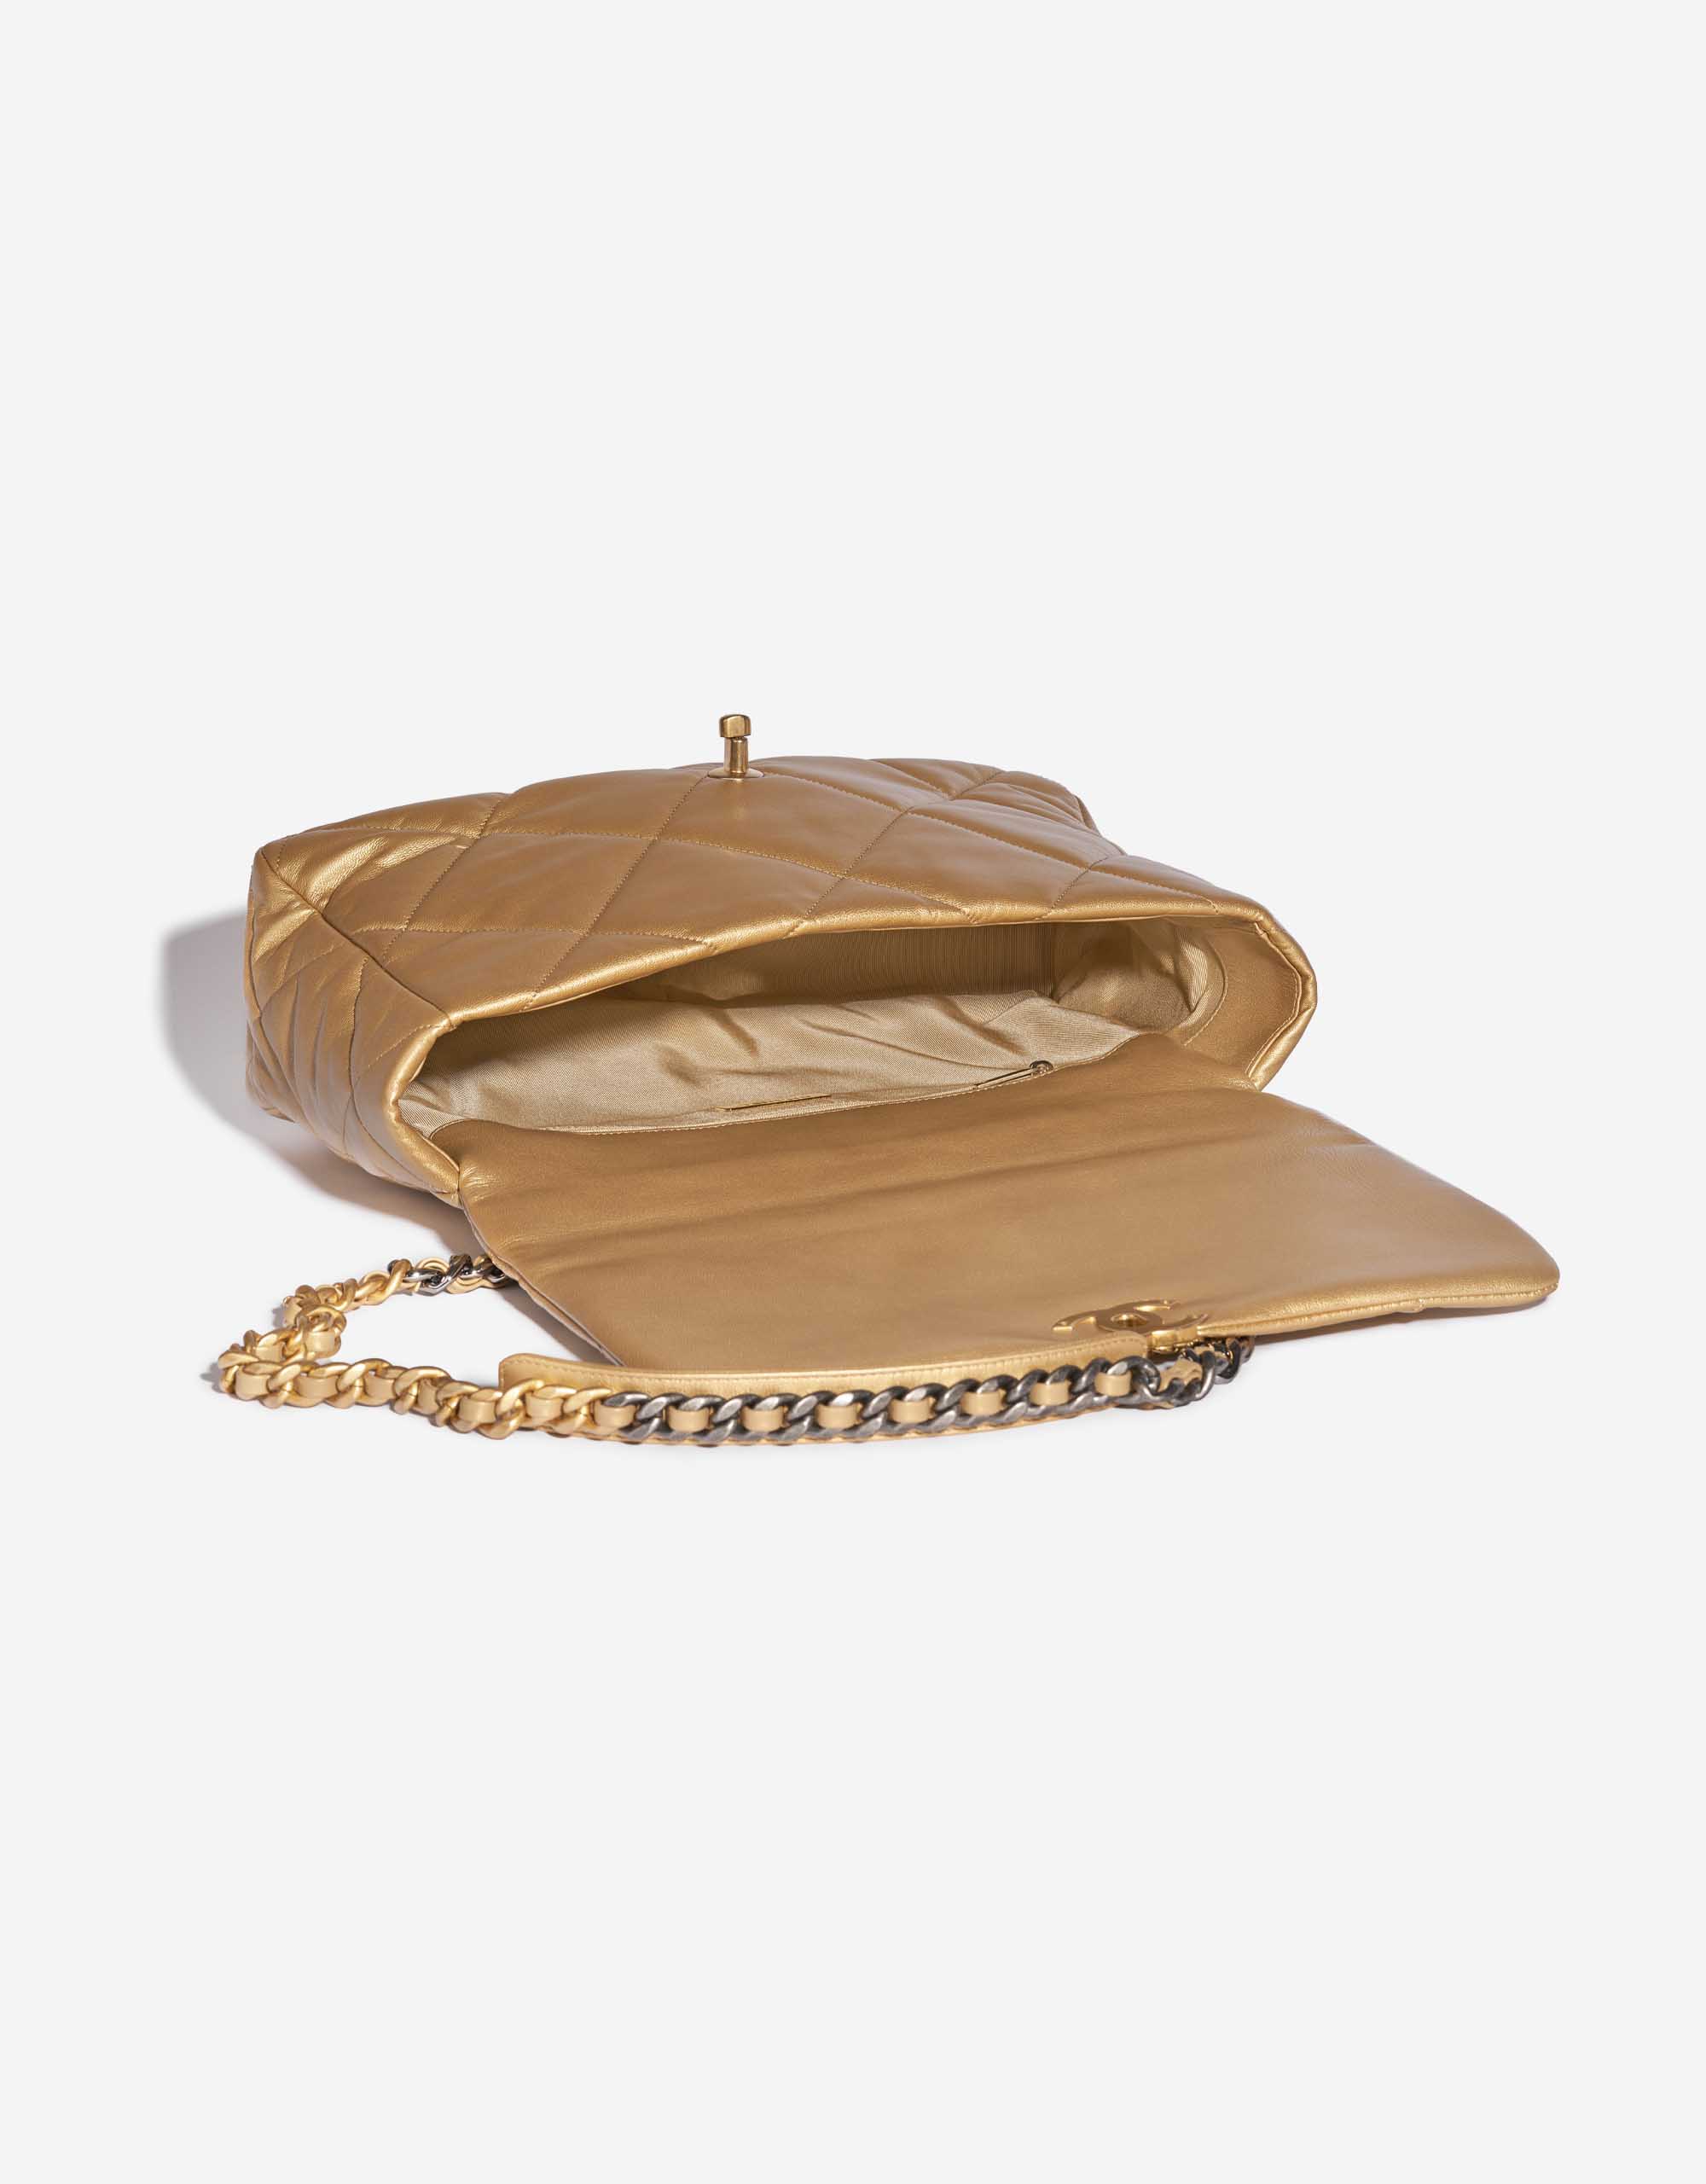 Pre-owned Chanel bag 19 Flap Bag Maxi Lamb Gold Gold Inside | Sell your designer bag on Saclab.com